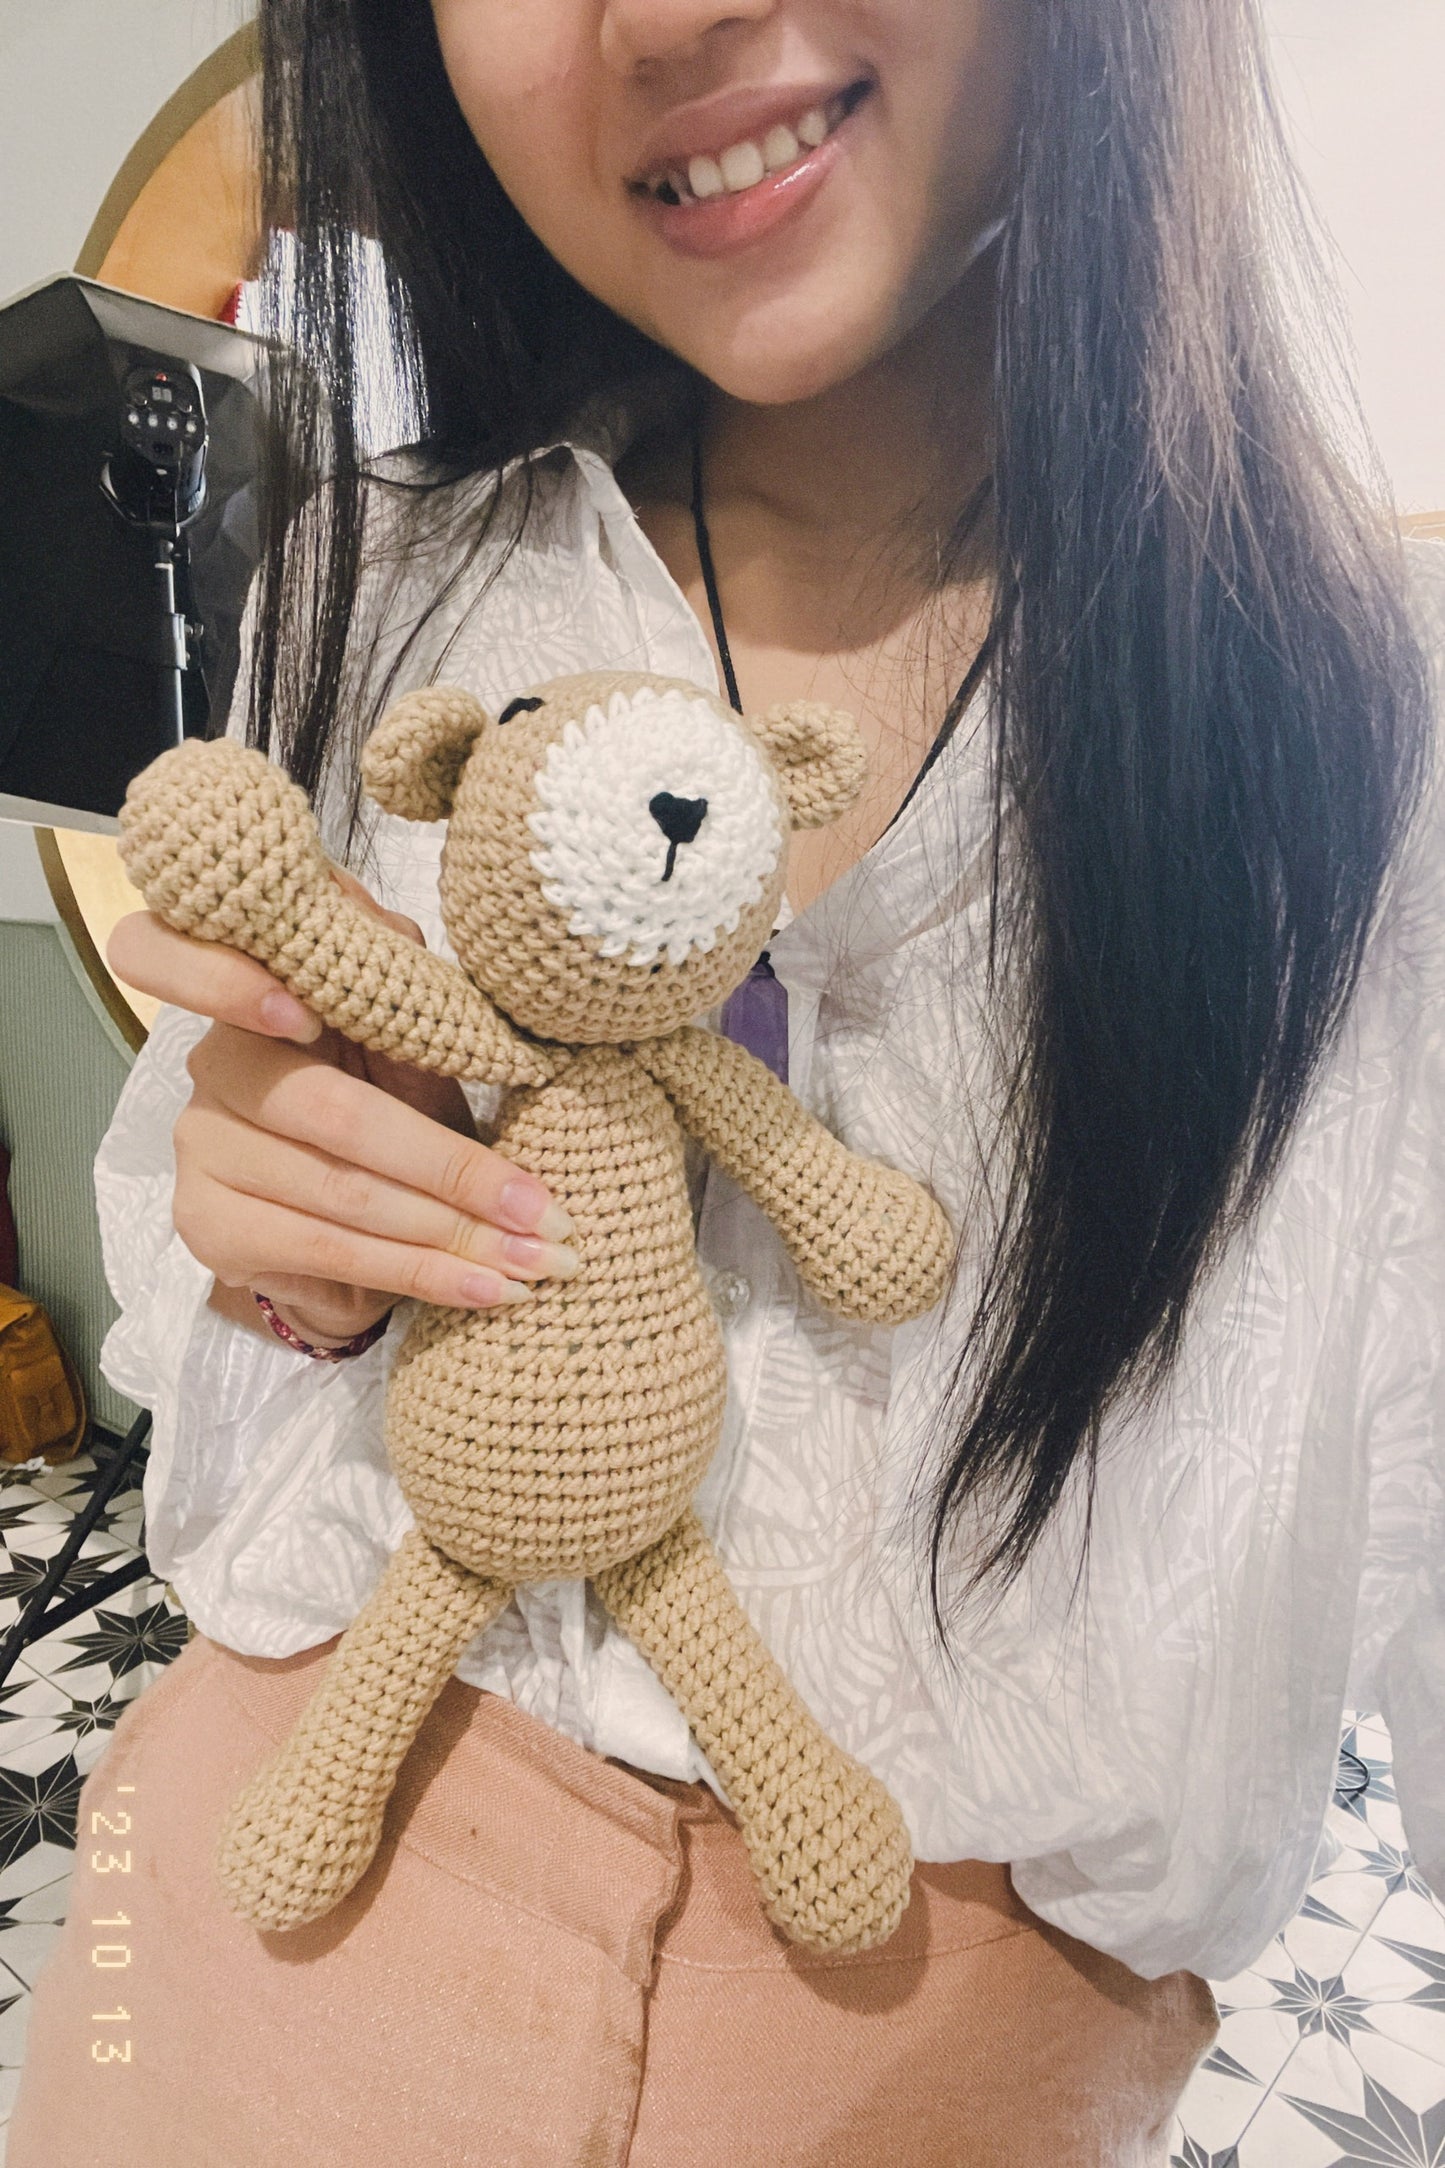 Brown Wild Bear Handmade Amigurumi Stuffed Toy Knit Crochet Doll VAC